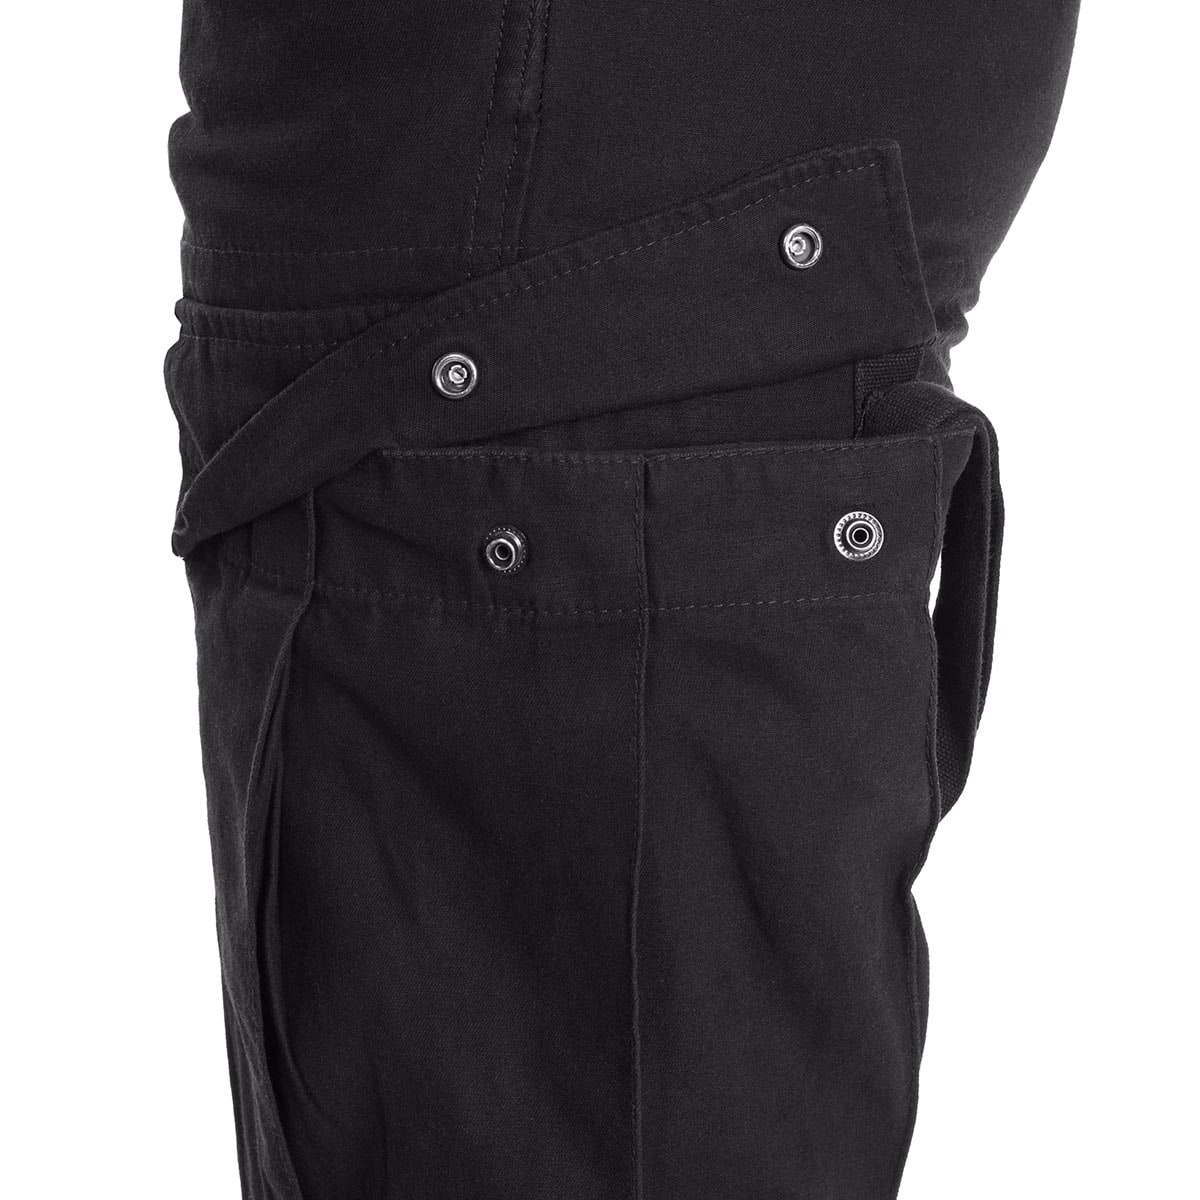 Spodnie damskie Brandit M65 - Antracyt